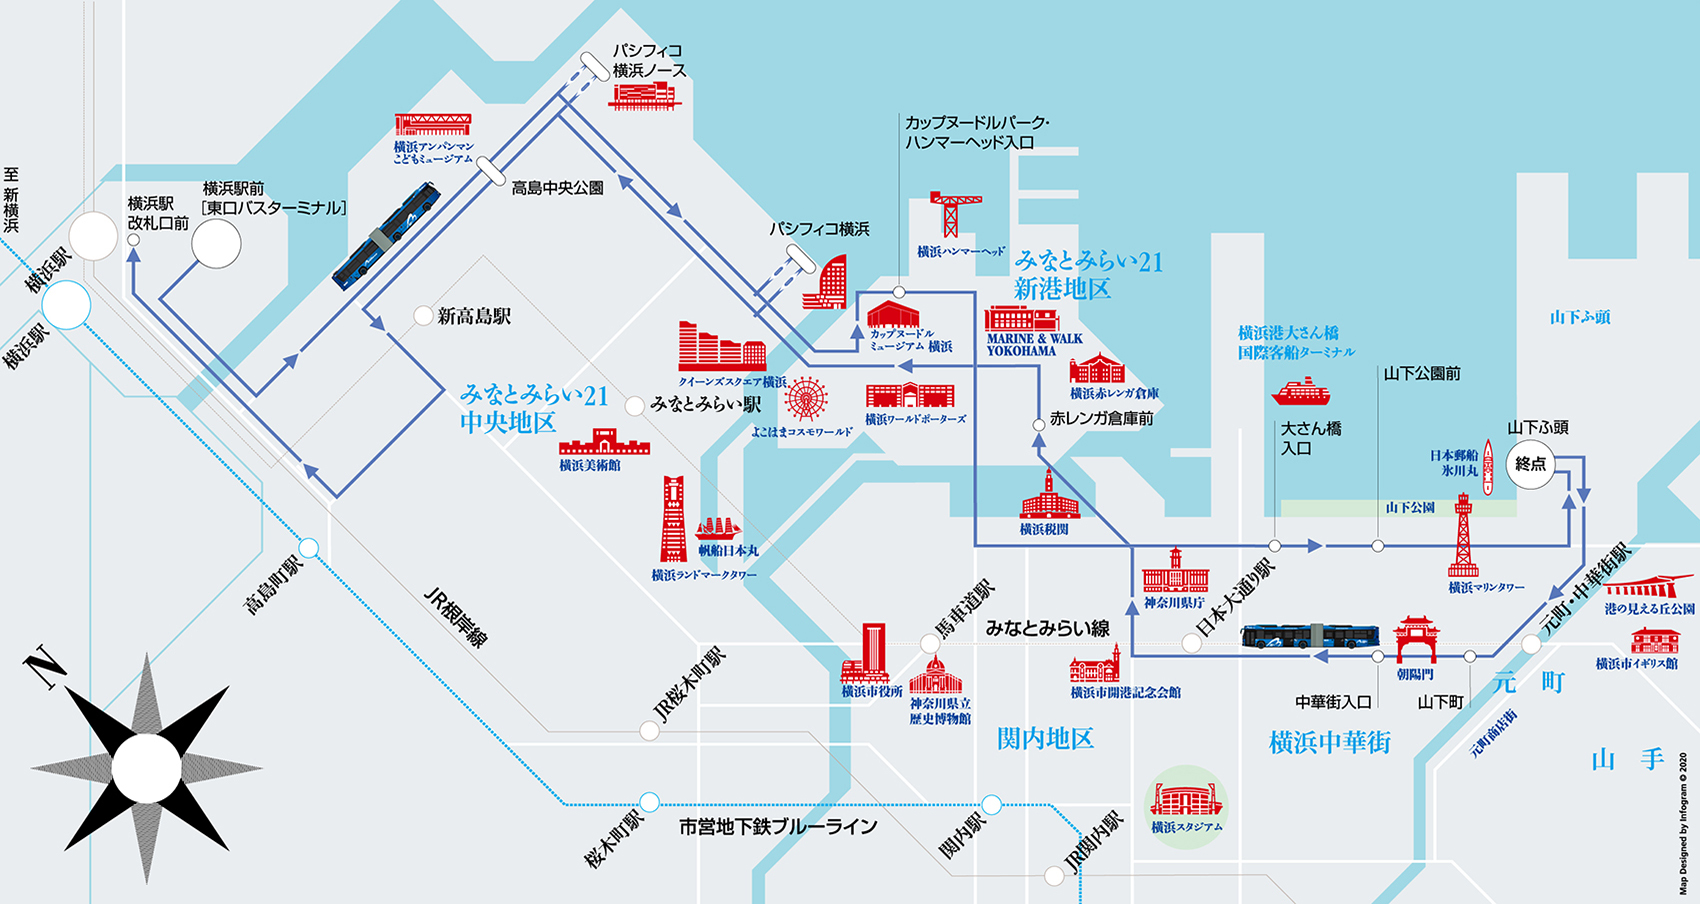 Bayside Blue ベイサイドブルー 運行開始 横浜市内の交通機関 公式 横浜市観光情報サイト Yokohama Official Visitors Guide